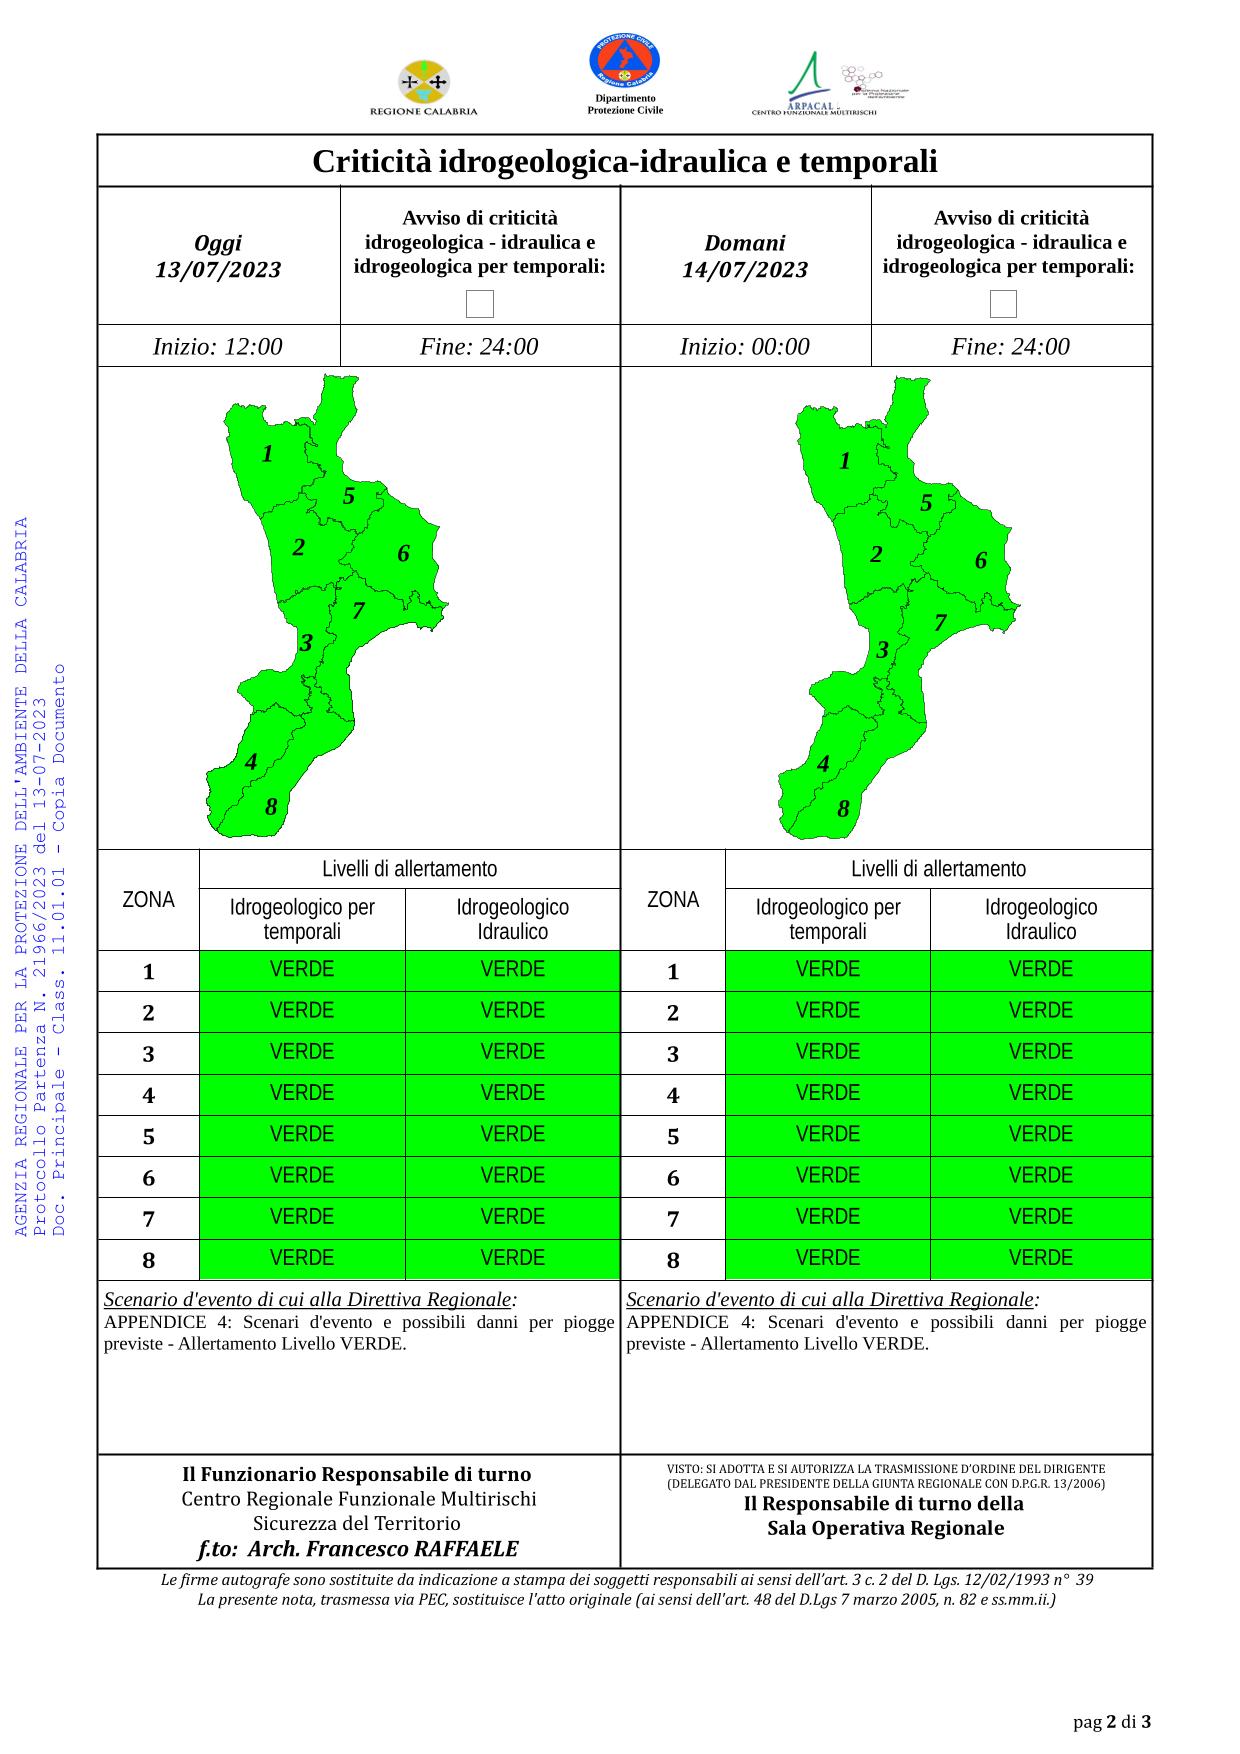 Criticità idrogeologica-idraulica e temporali in Calabria 15-07-2023